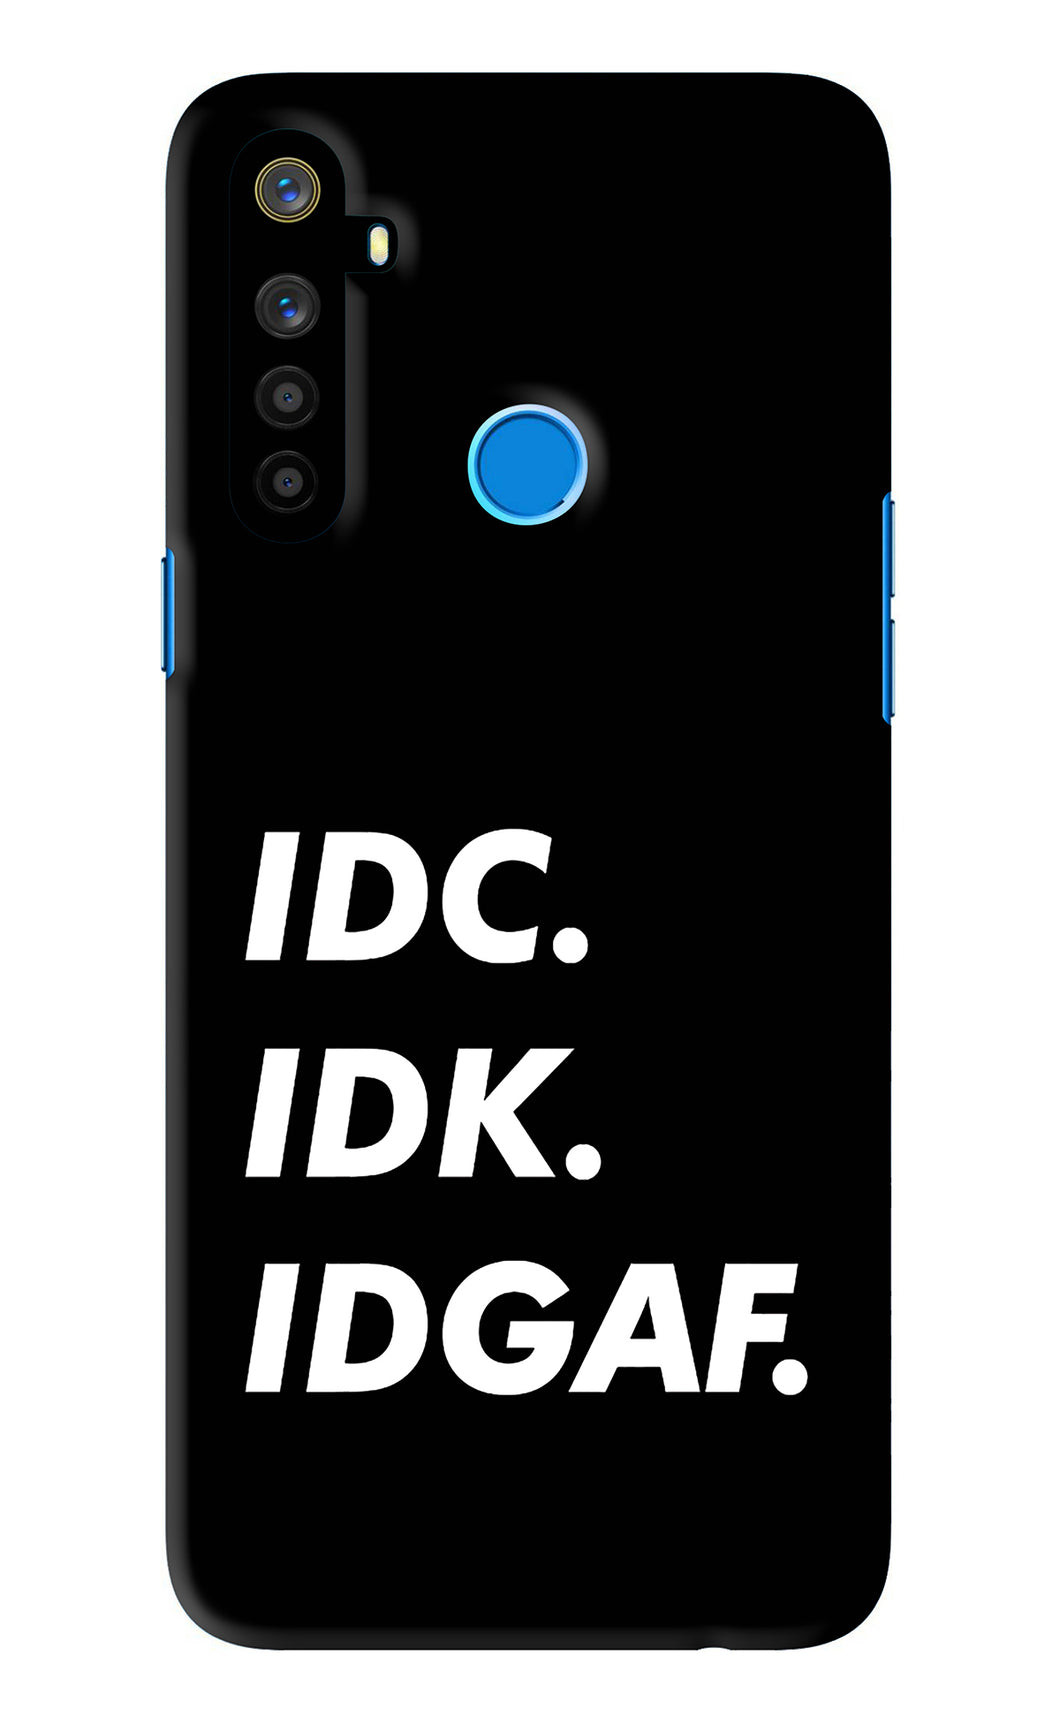 Idc Idk Idgaf Realme 5s Back Skin Wrap